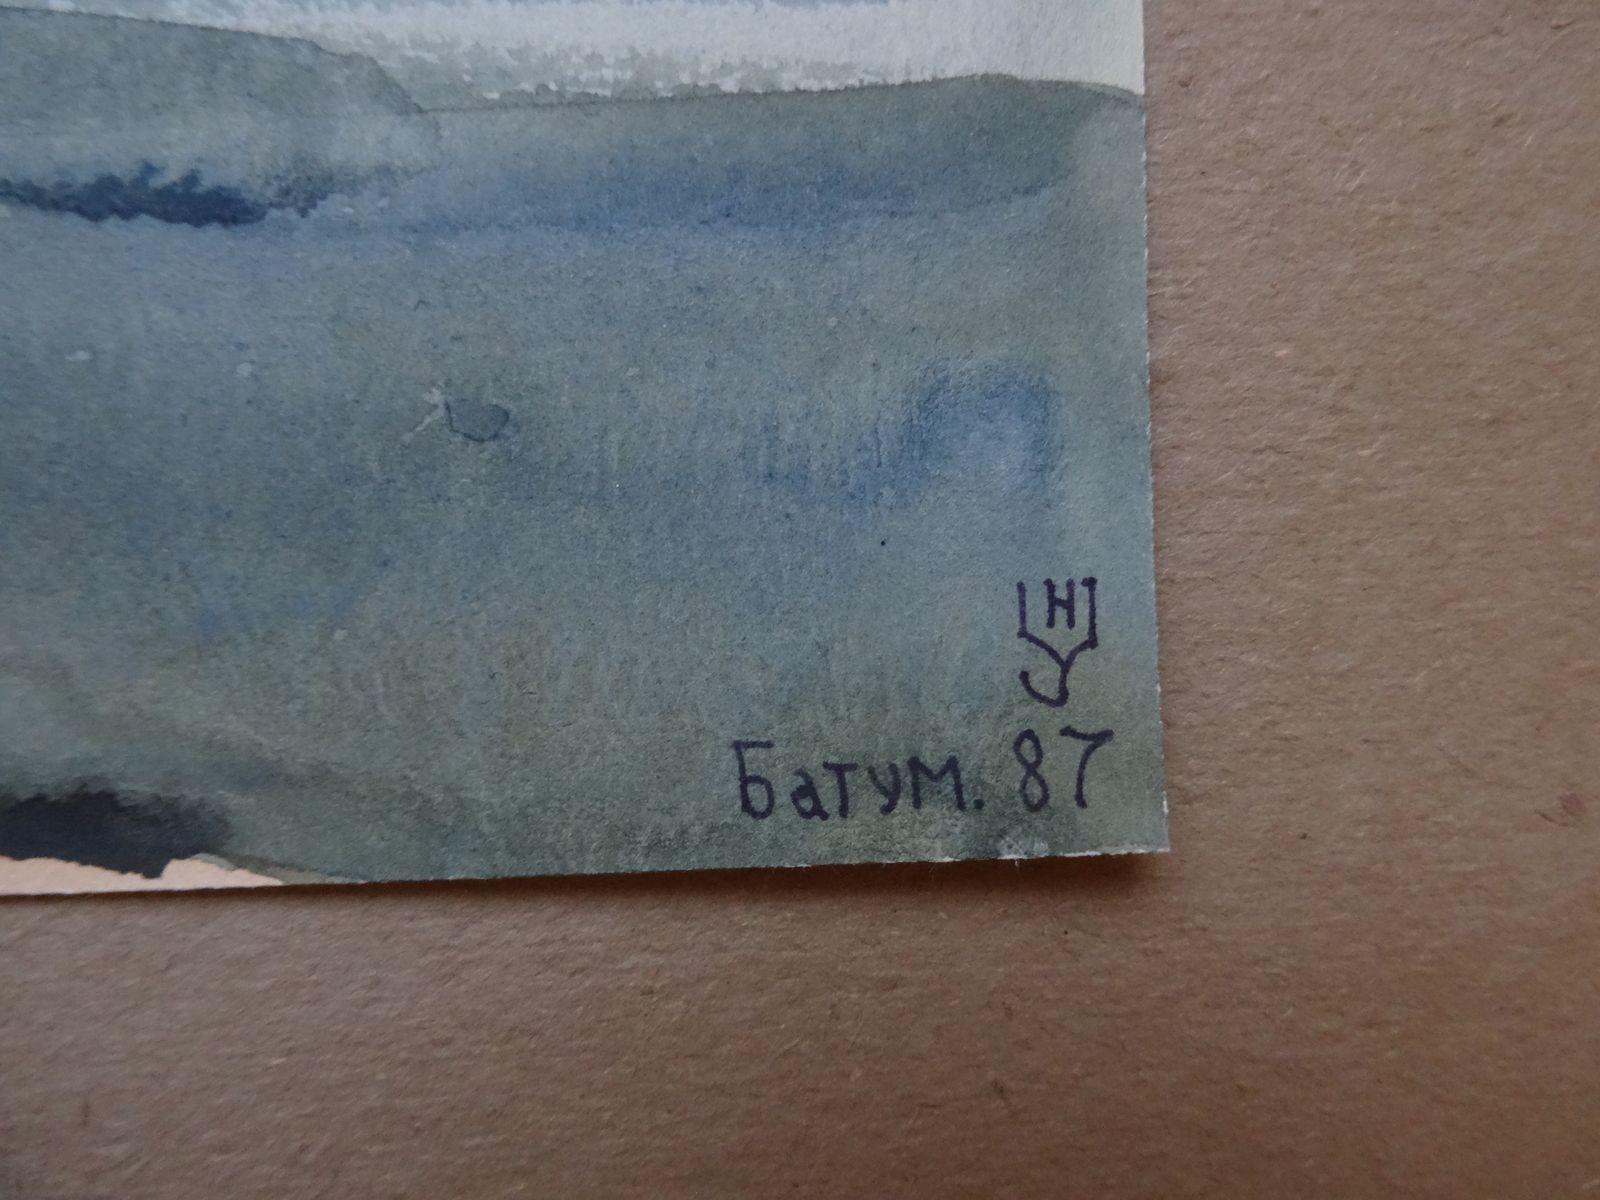 Batumi. 1987, Papier, Aquarell, 18,5 x 30 cm – Painting von Nikolai Uvarov 